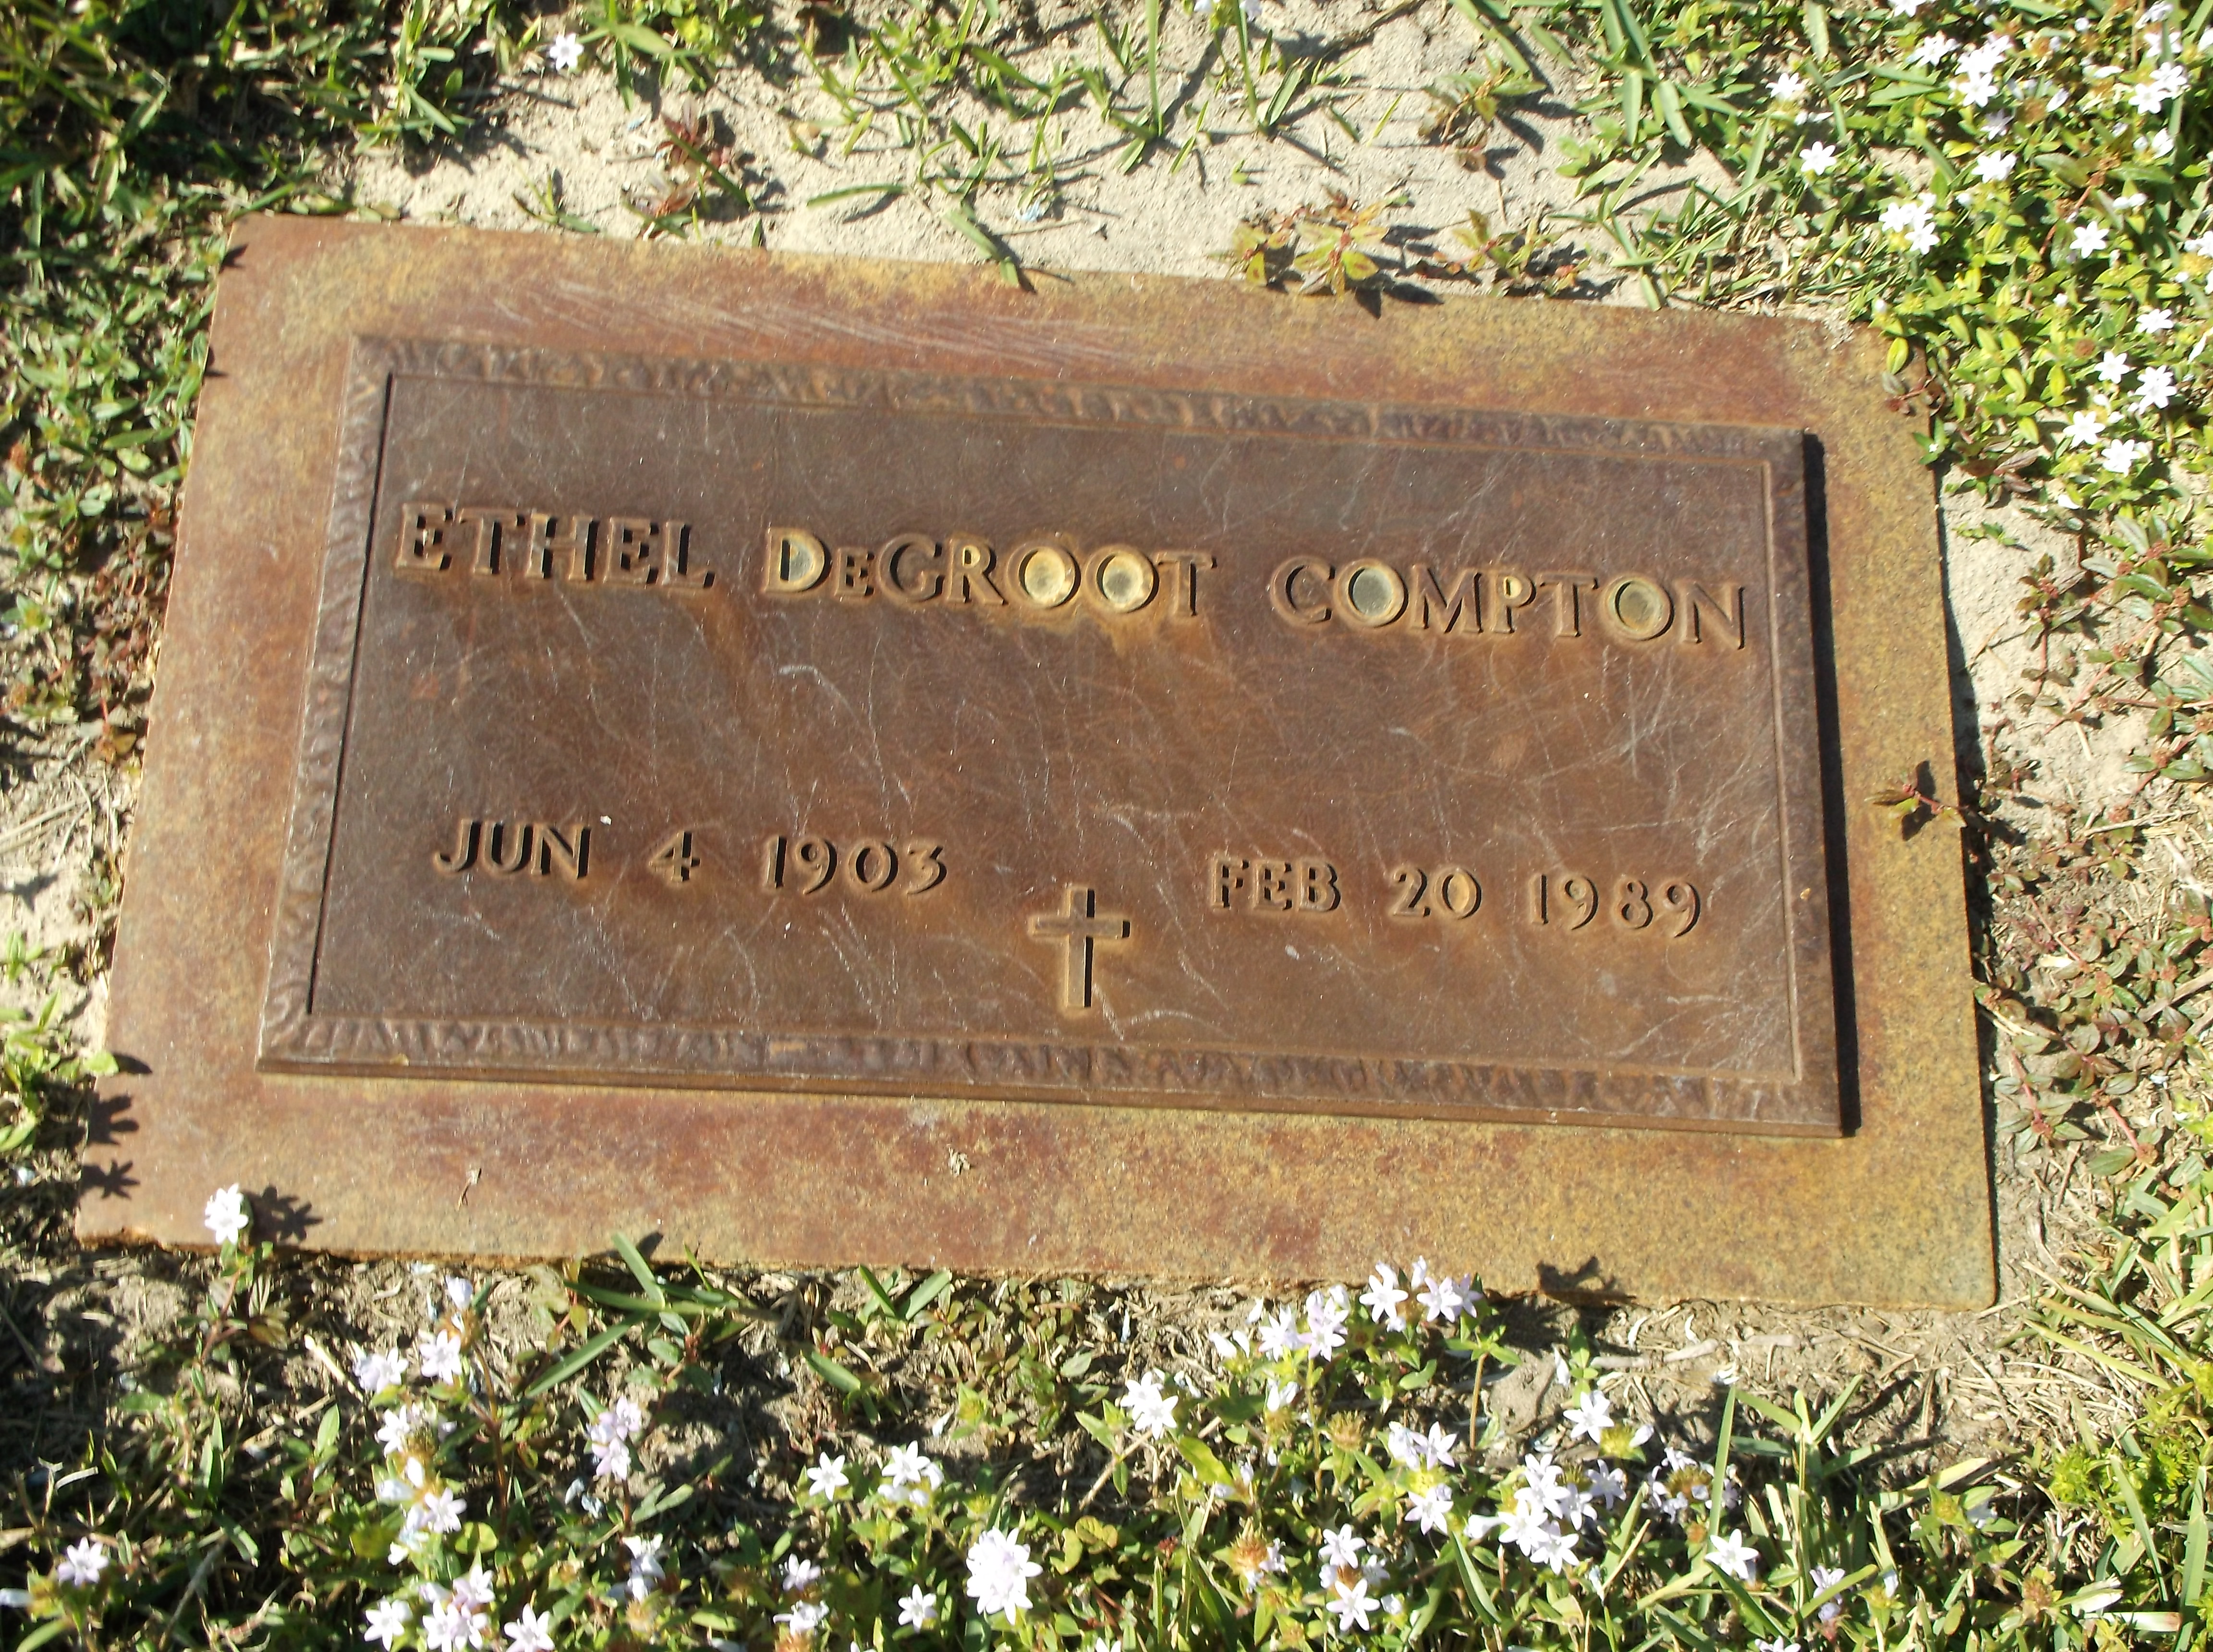 Ethel DeGroot Compton